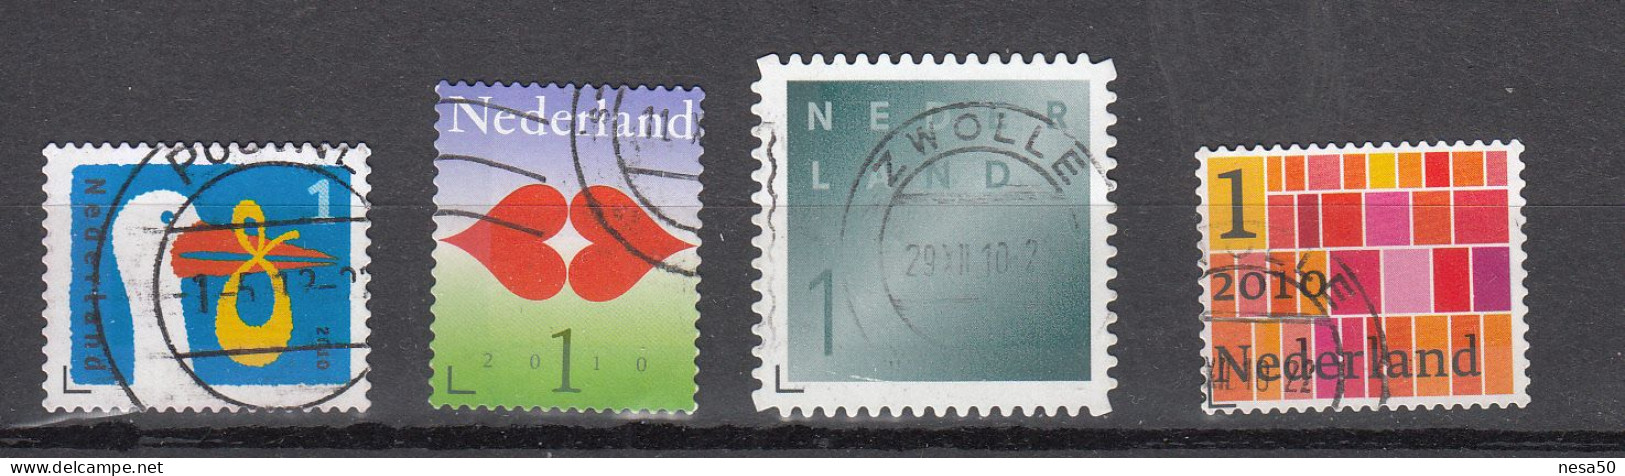 Nederland 2010 Nvph Nr 2744 - 2747, Mi Nr 2756 - 2758, Geboortezegel, Liefde, Rouw + Zakenpostzegel - Oblitérés